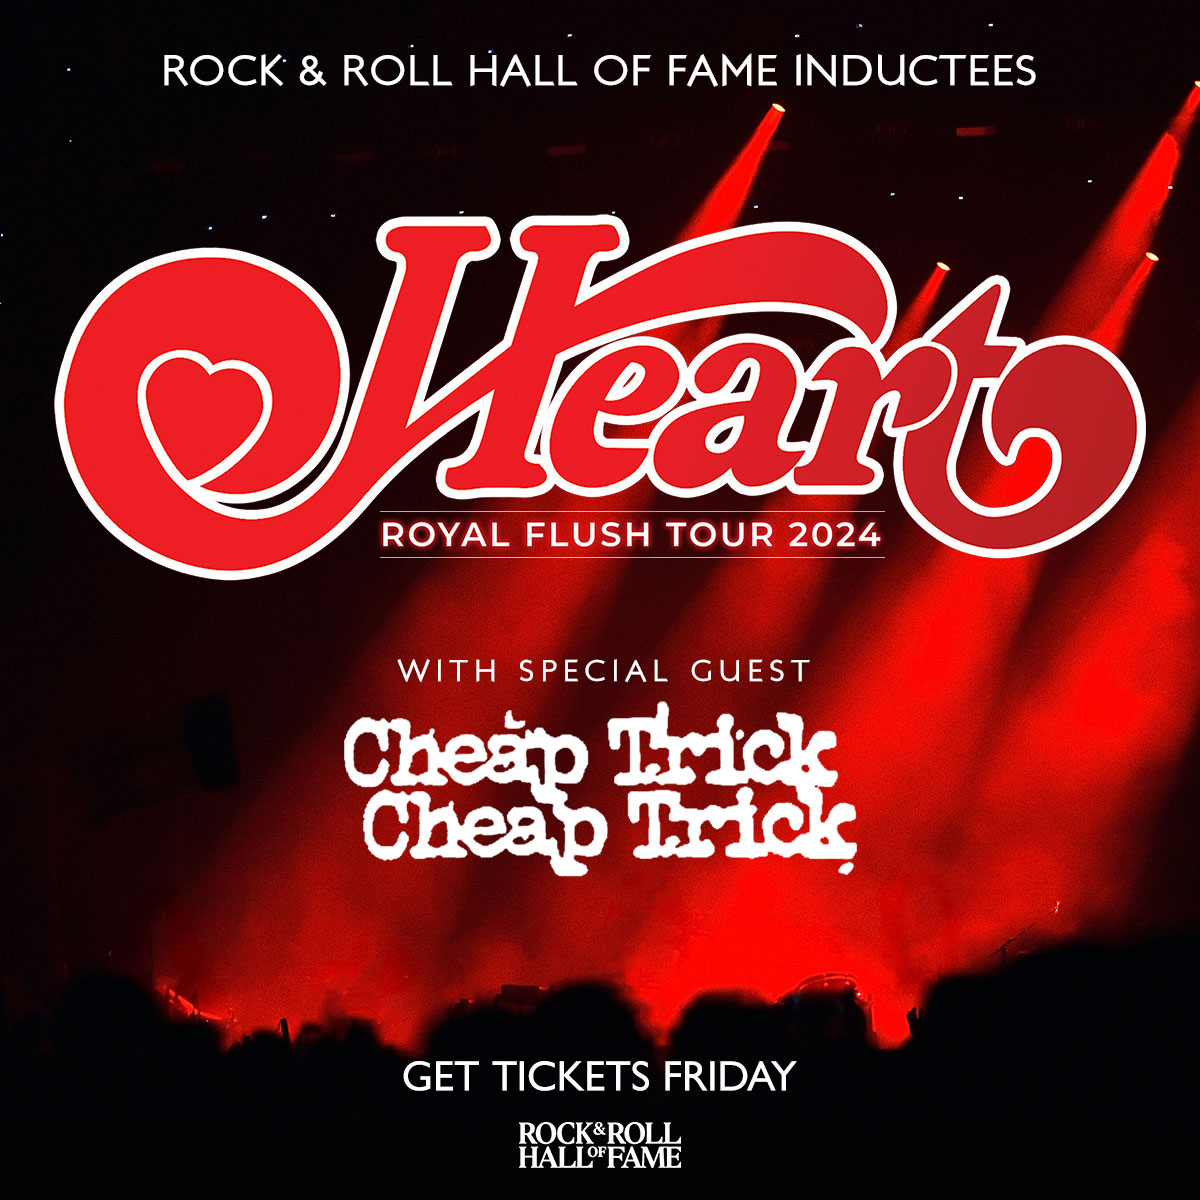 Reunited Heart announces longawaited 'Royal Flush Tour 2024,' KeyBank